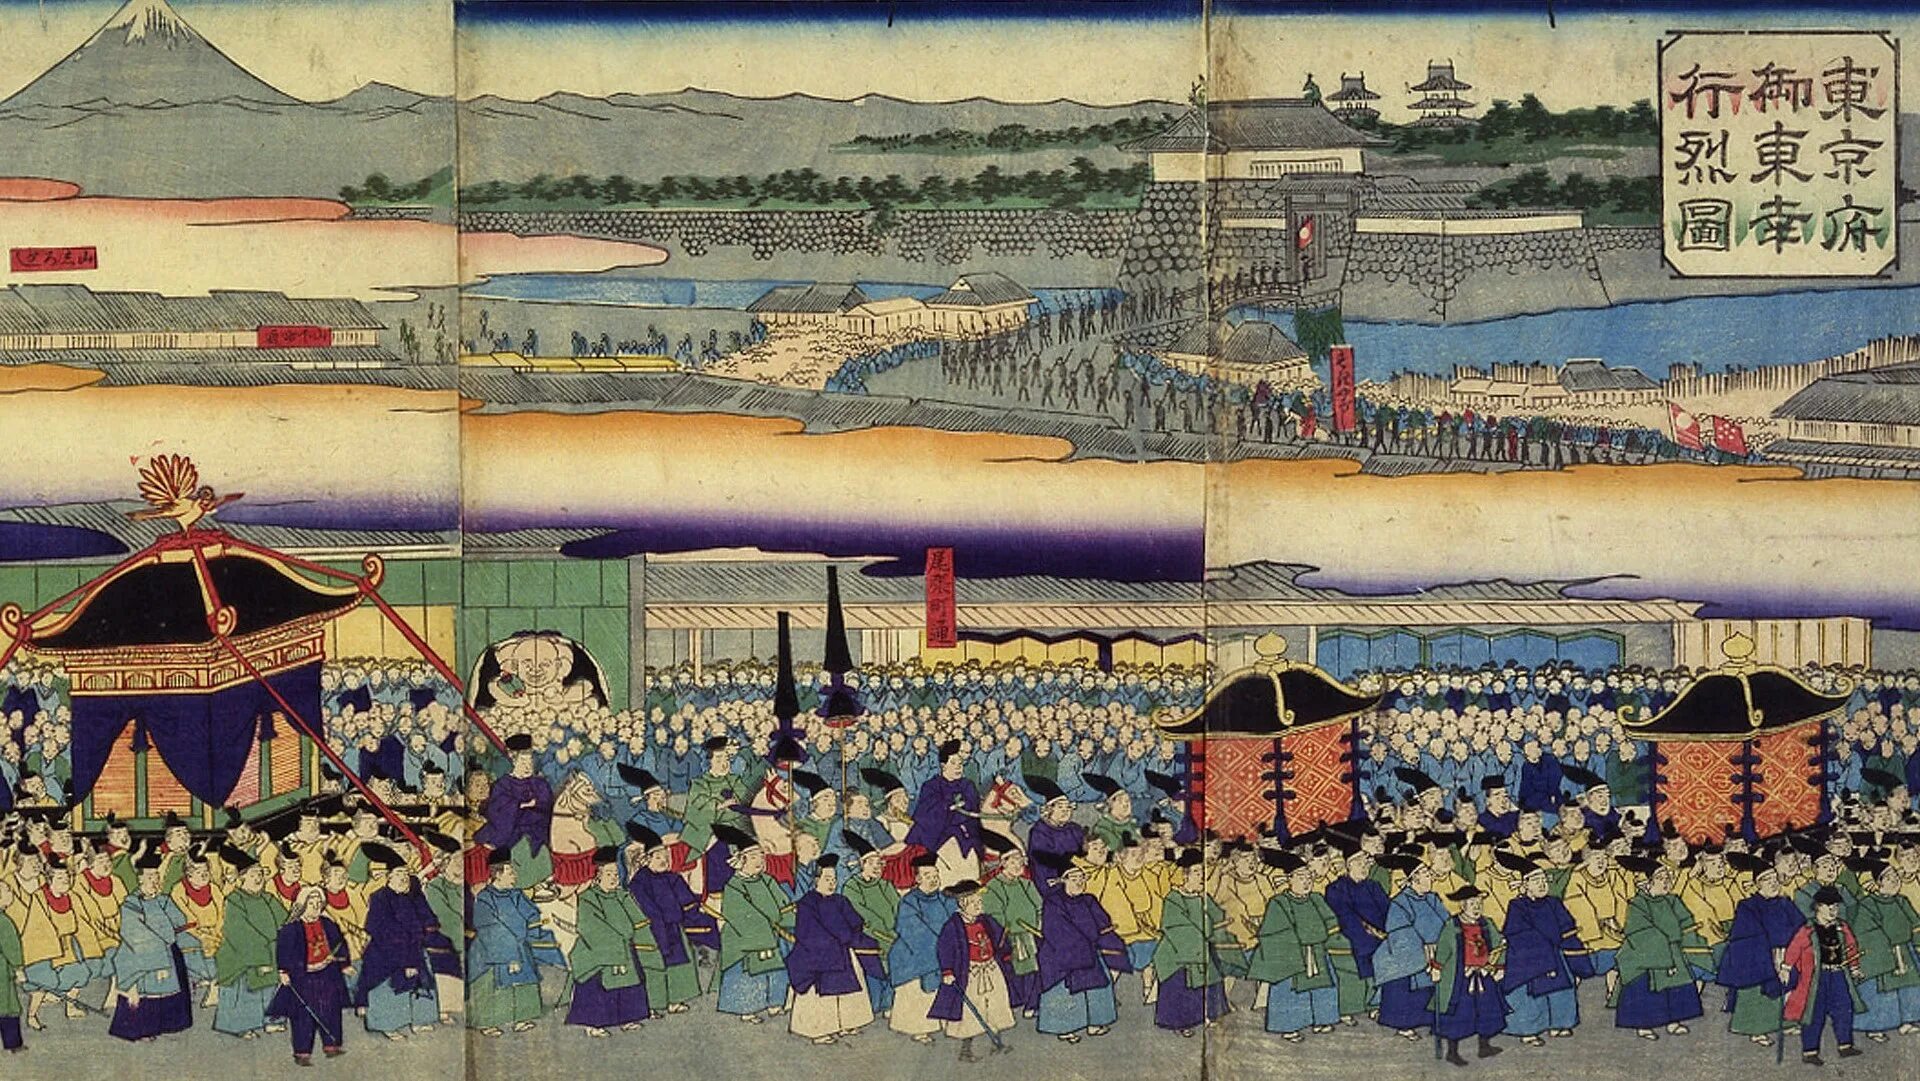 Япония эпохи Мэйдзи. Школа 19 век Япония эпоха Мэйдзи. Мэйдзи эпоха Мэйдзи. Япония 19 век дворец сёгуна Мэйдзи.